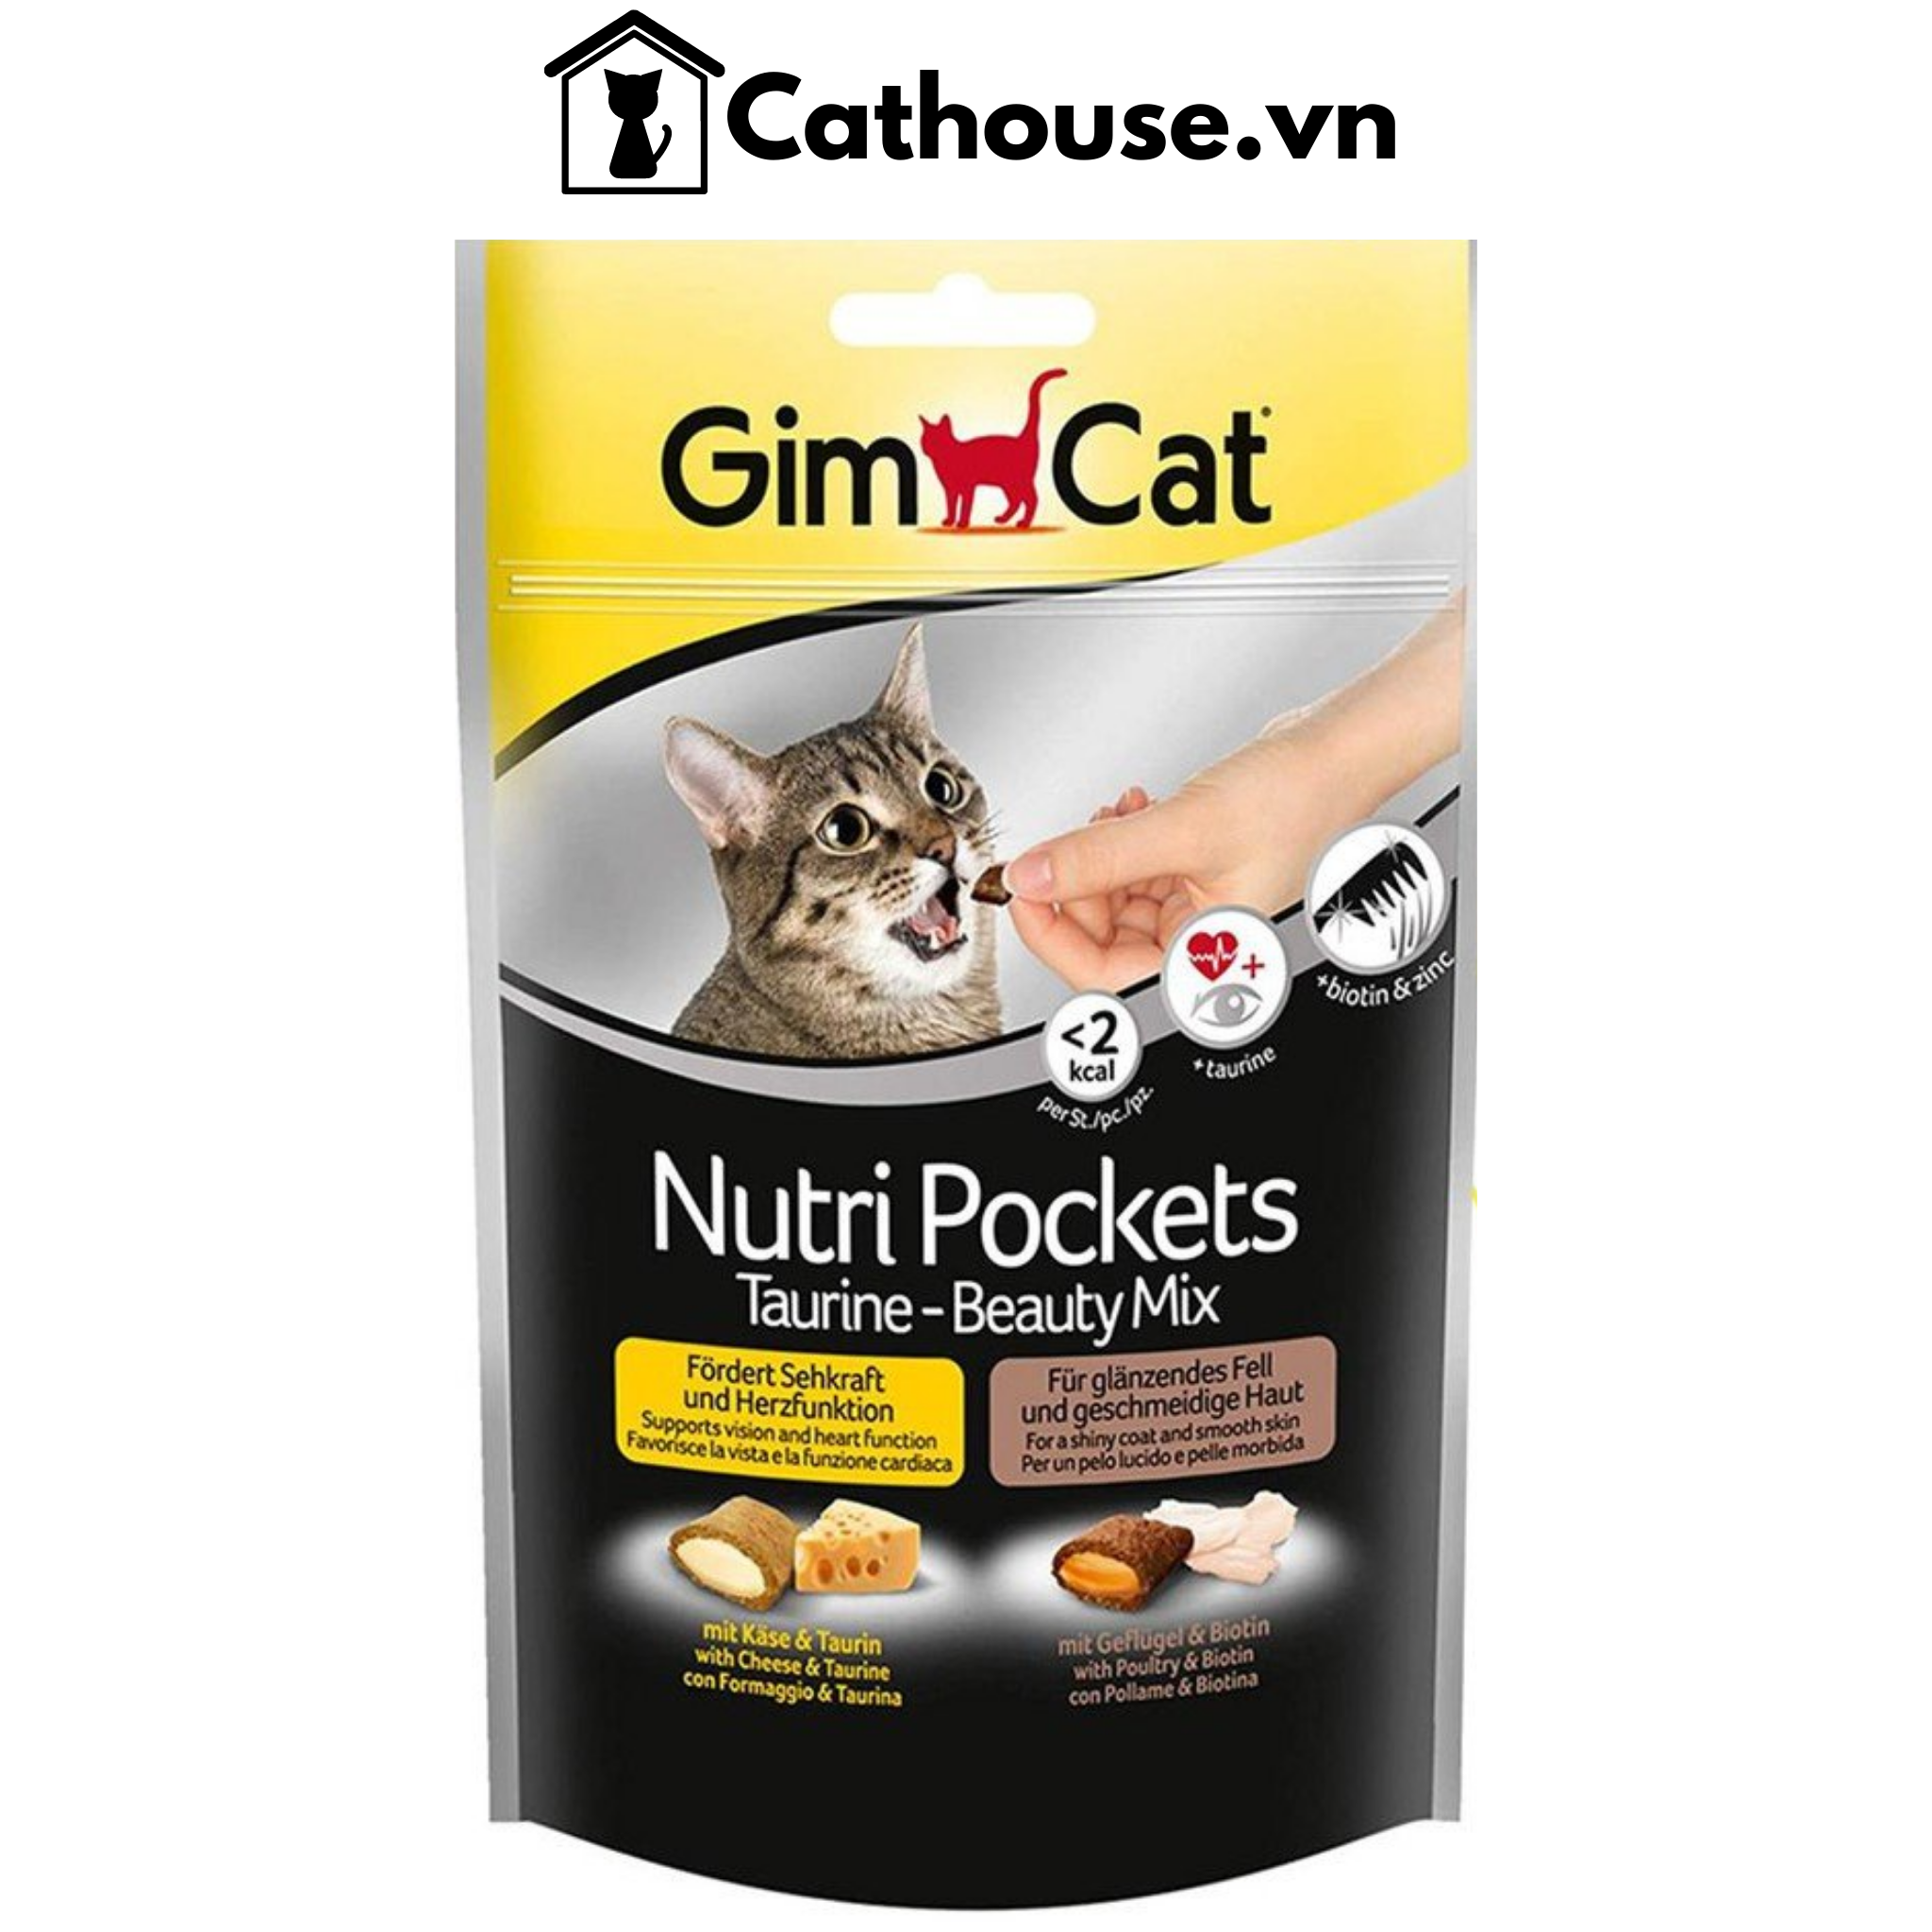  GimCat Nutri Pockets Taurine - Beauty Mix 150G - Snack Bánh Quy Giòn Bổ Sung Biotin, Kẽm, Taurine 